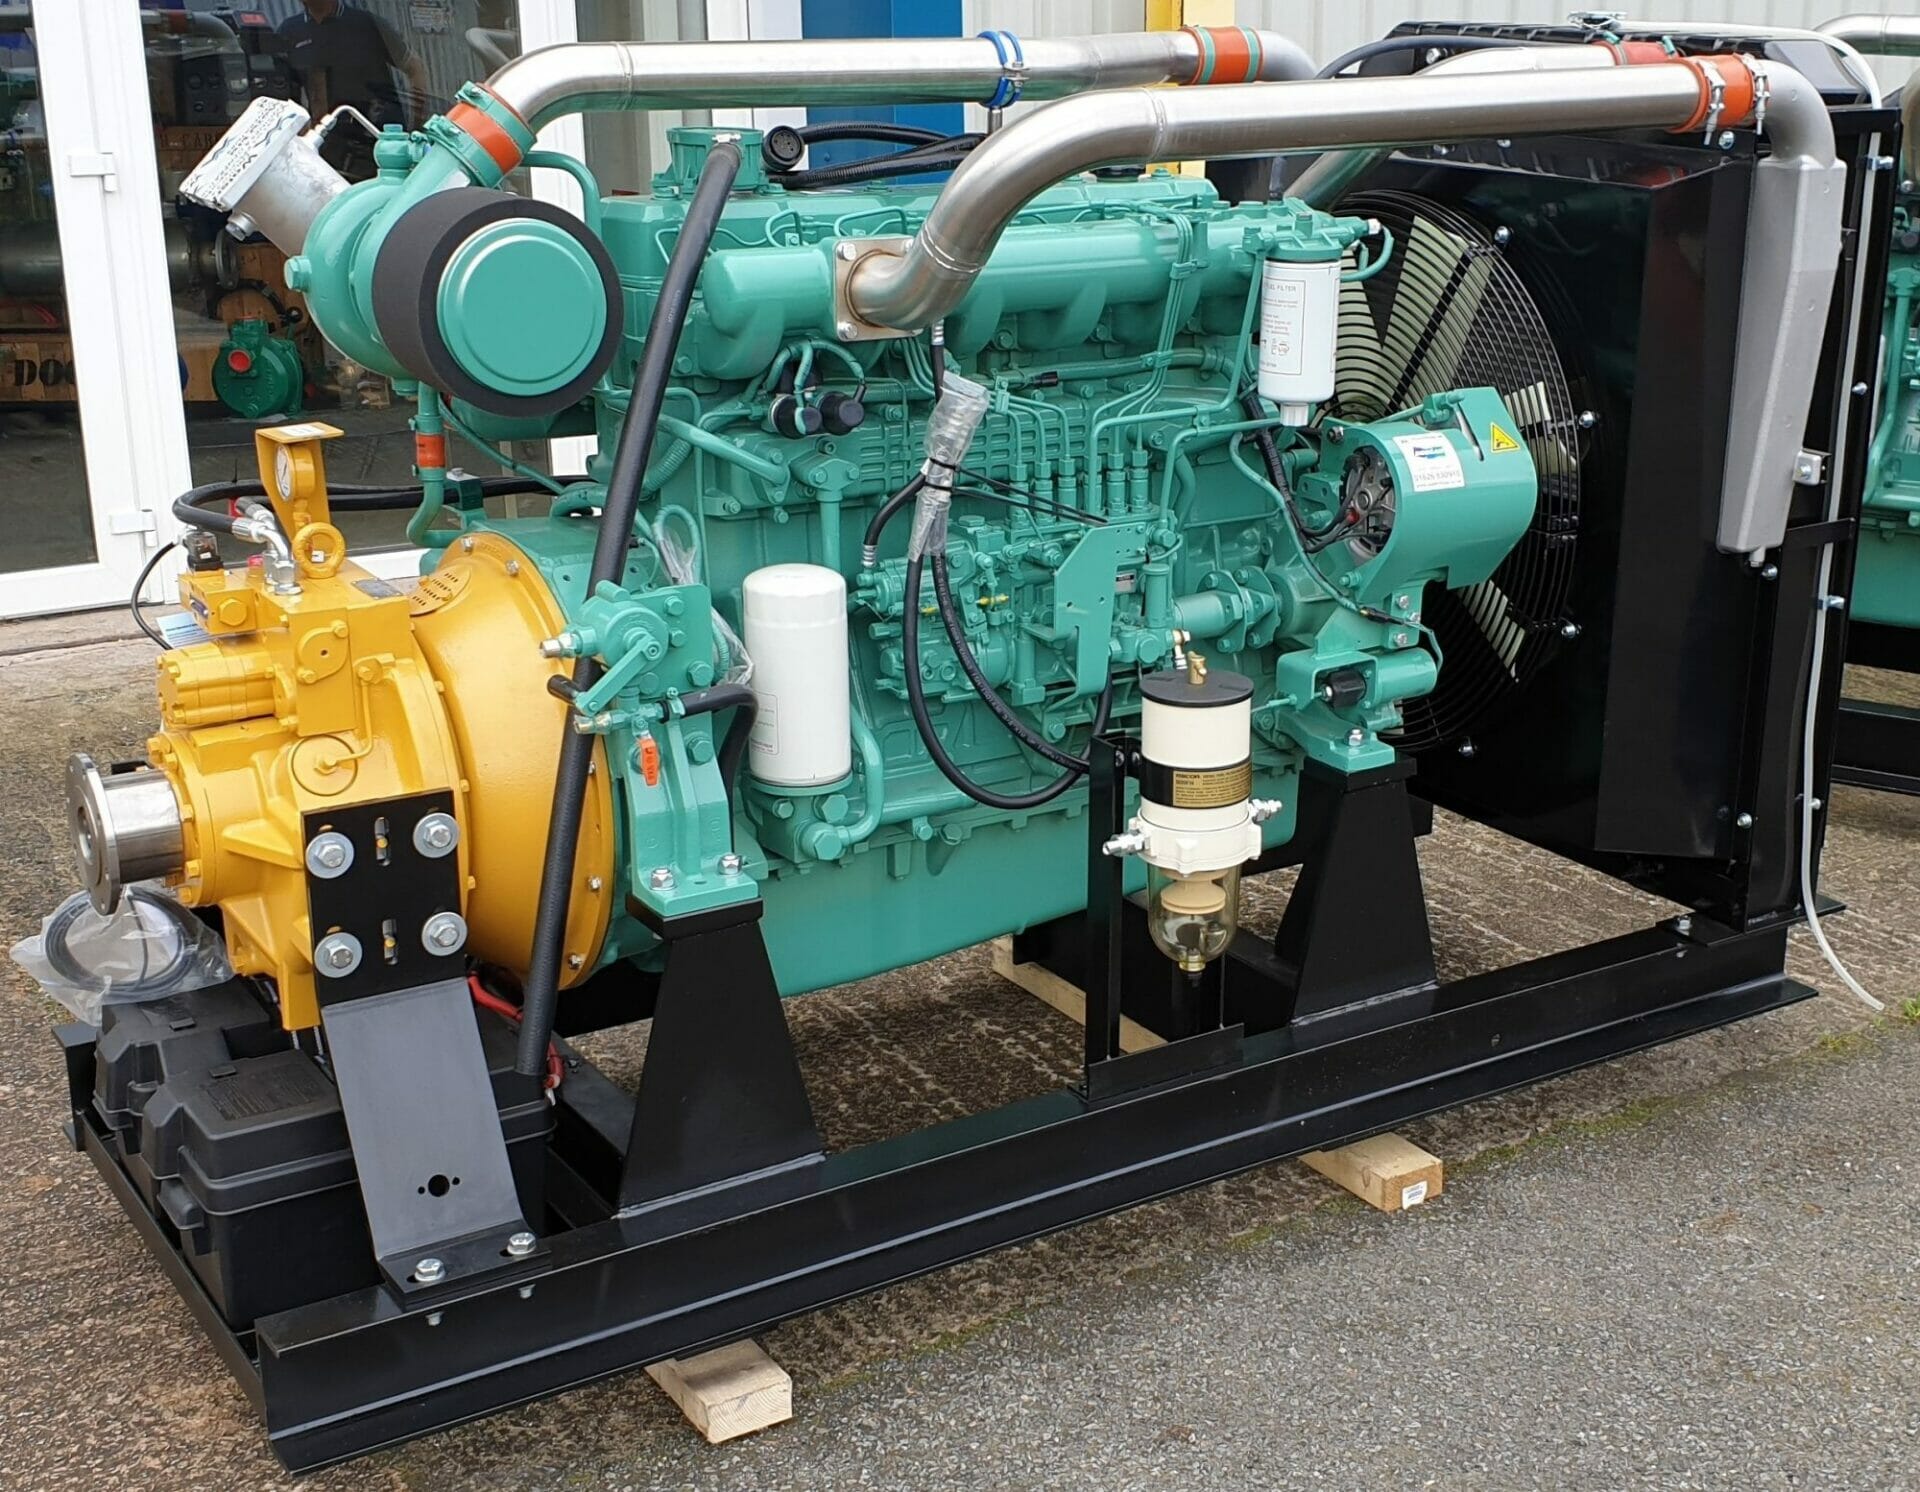 Current Doosan Marine Engine Stock October 2019